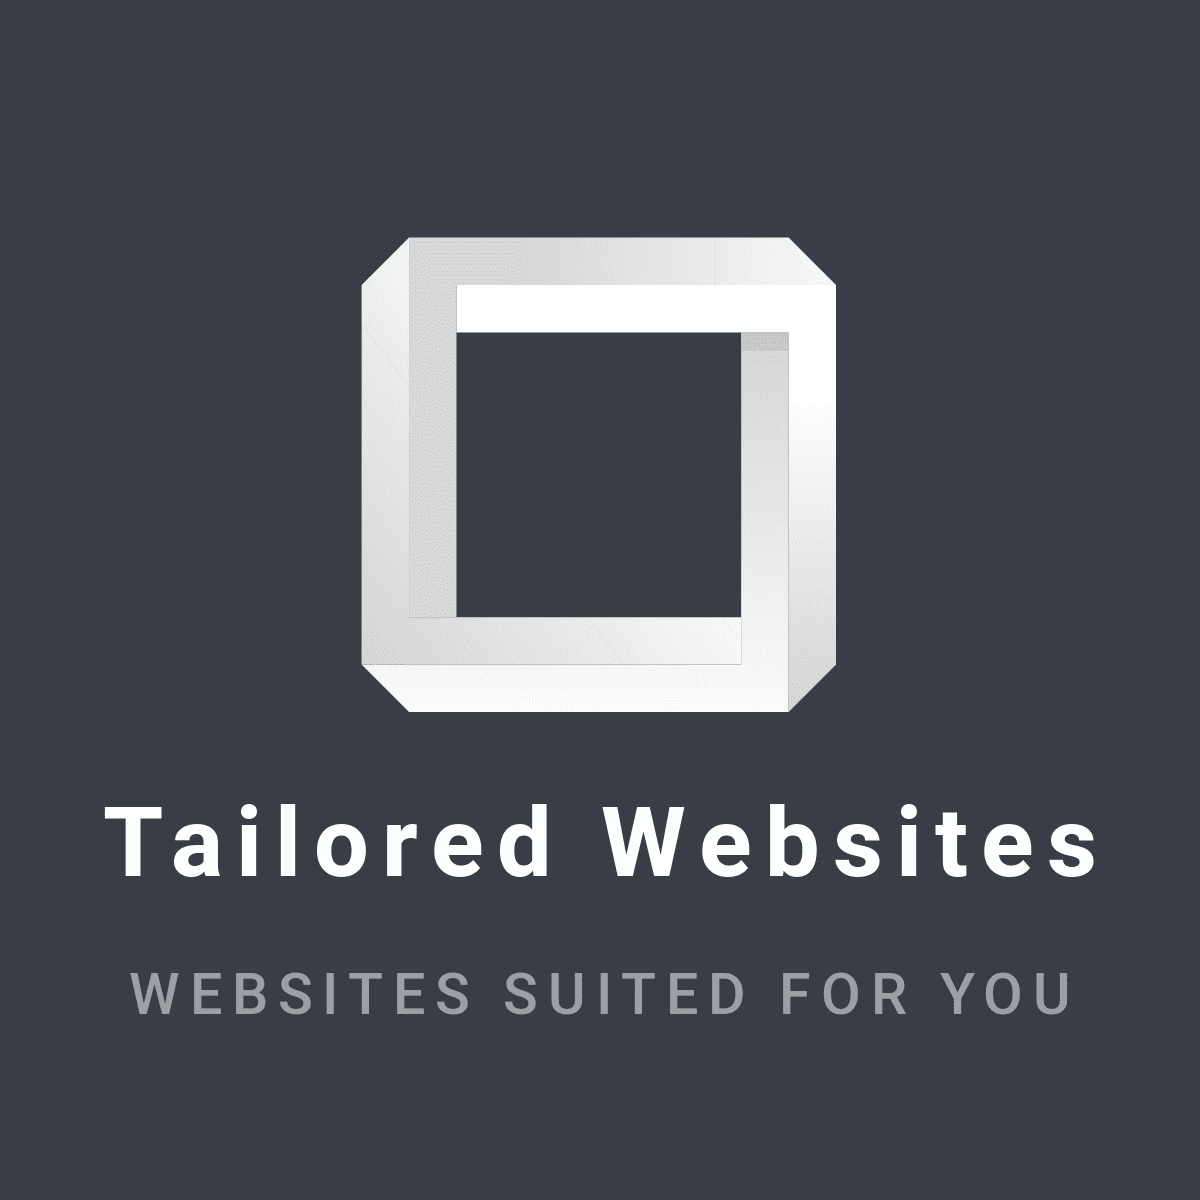 Tailored Websites